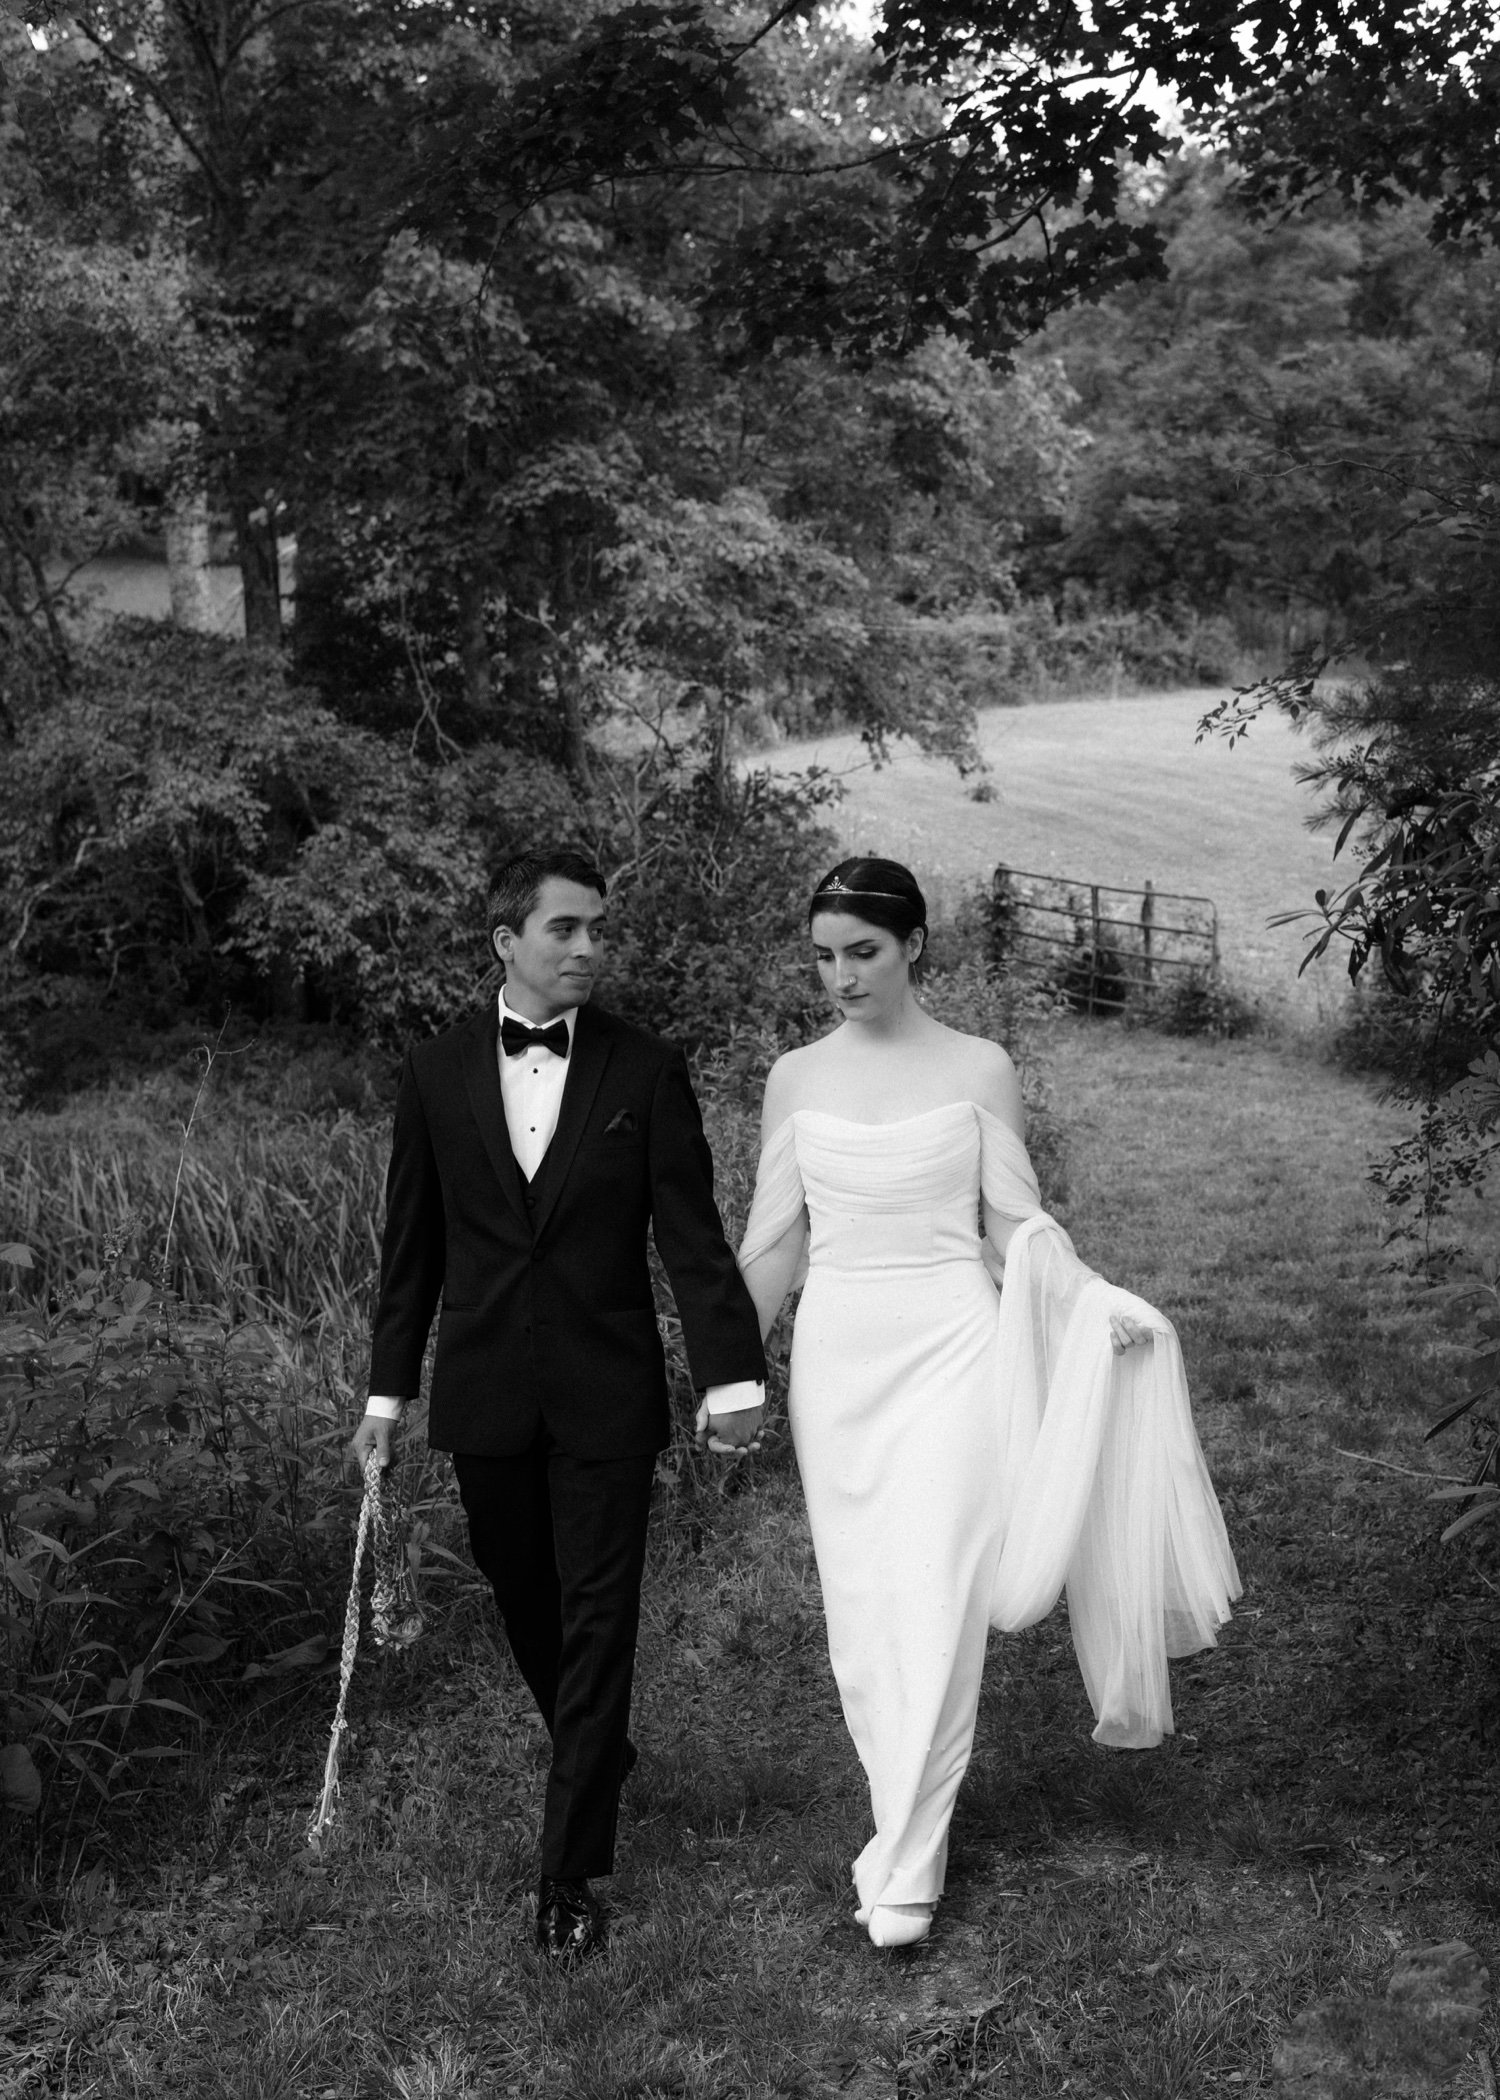 Art-deco-stylish-bride-and-groom-in-an-intimate-wedding-in-North-Carolina.jpg.jpg